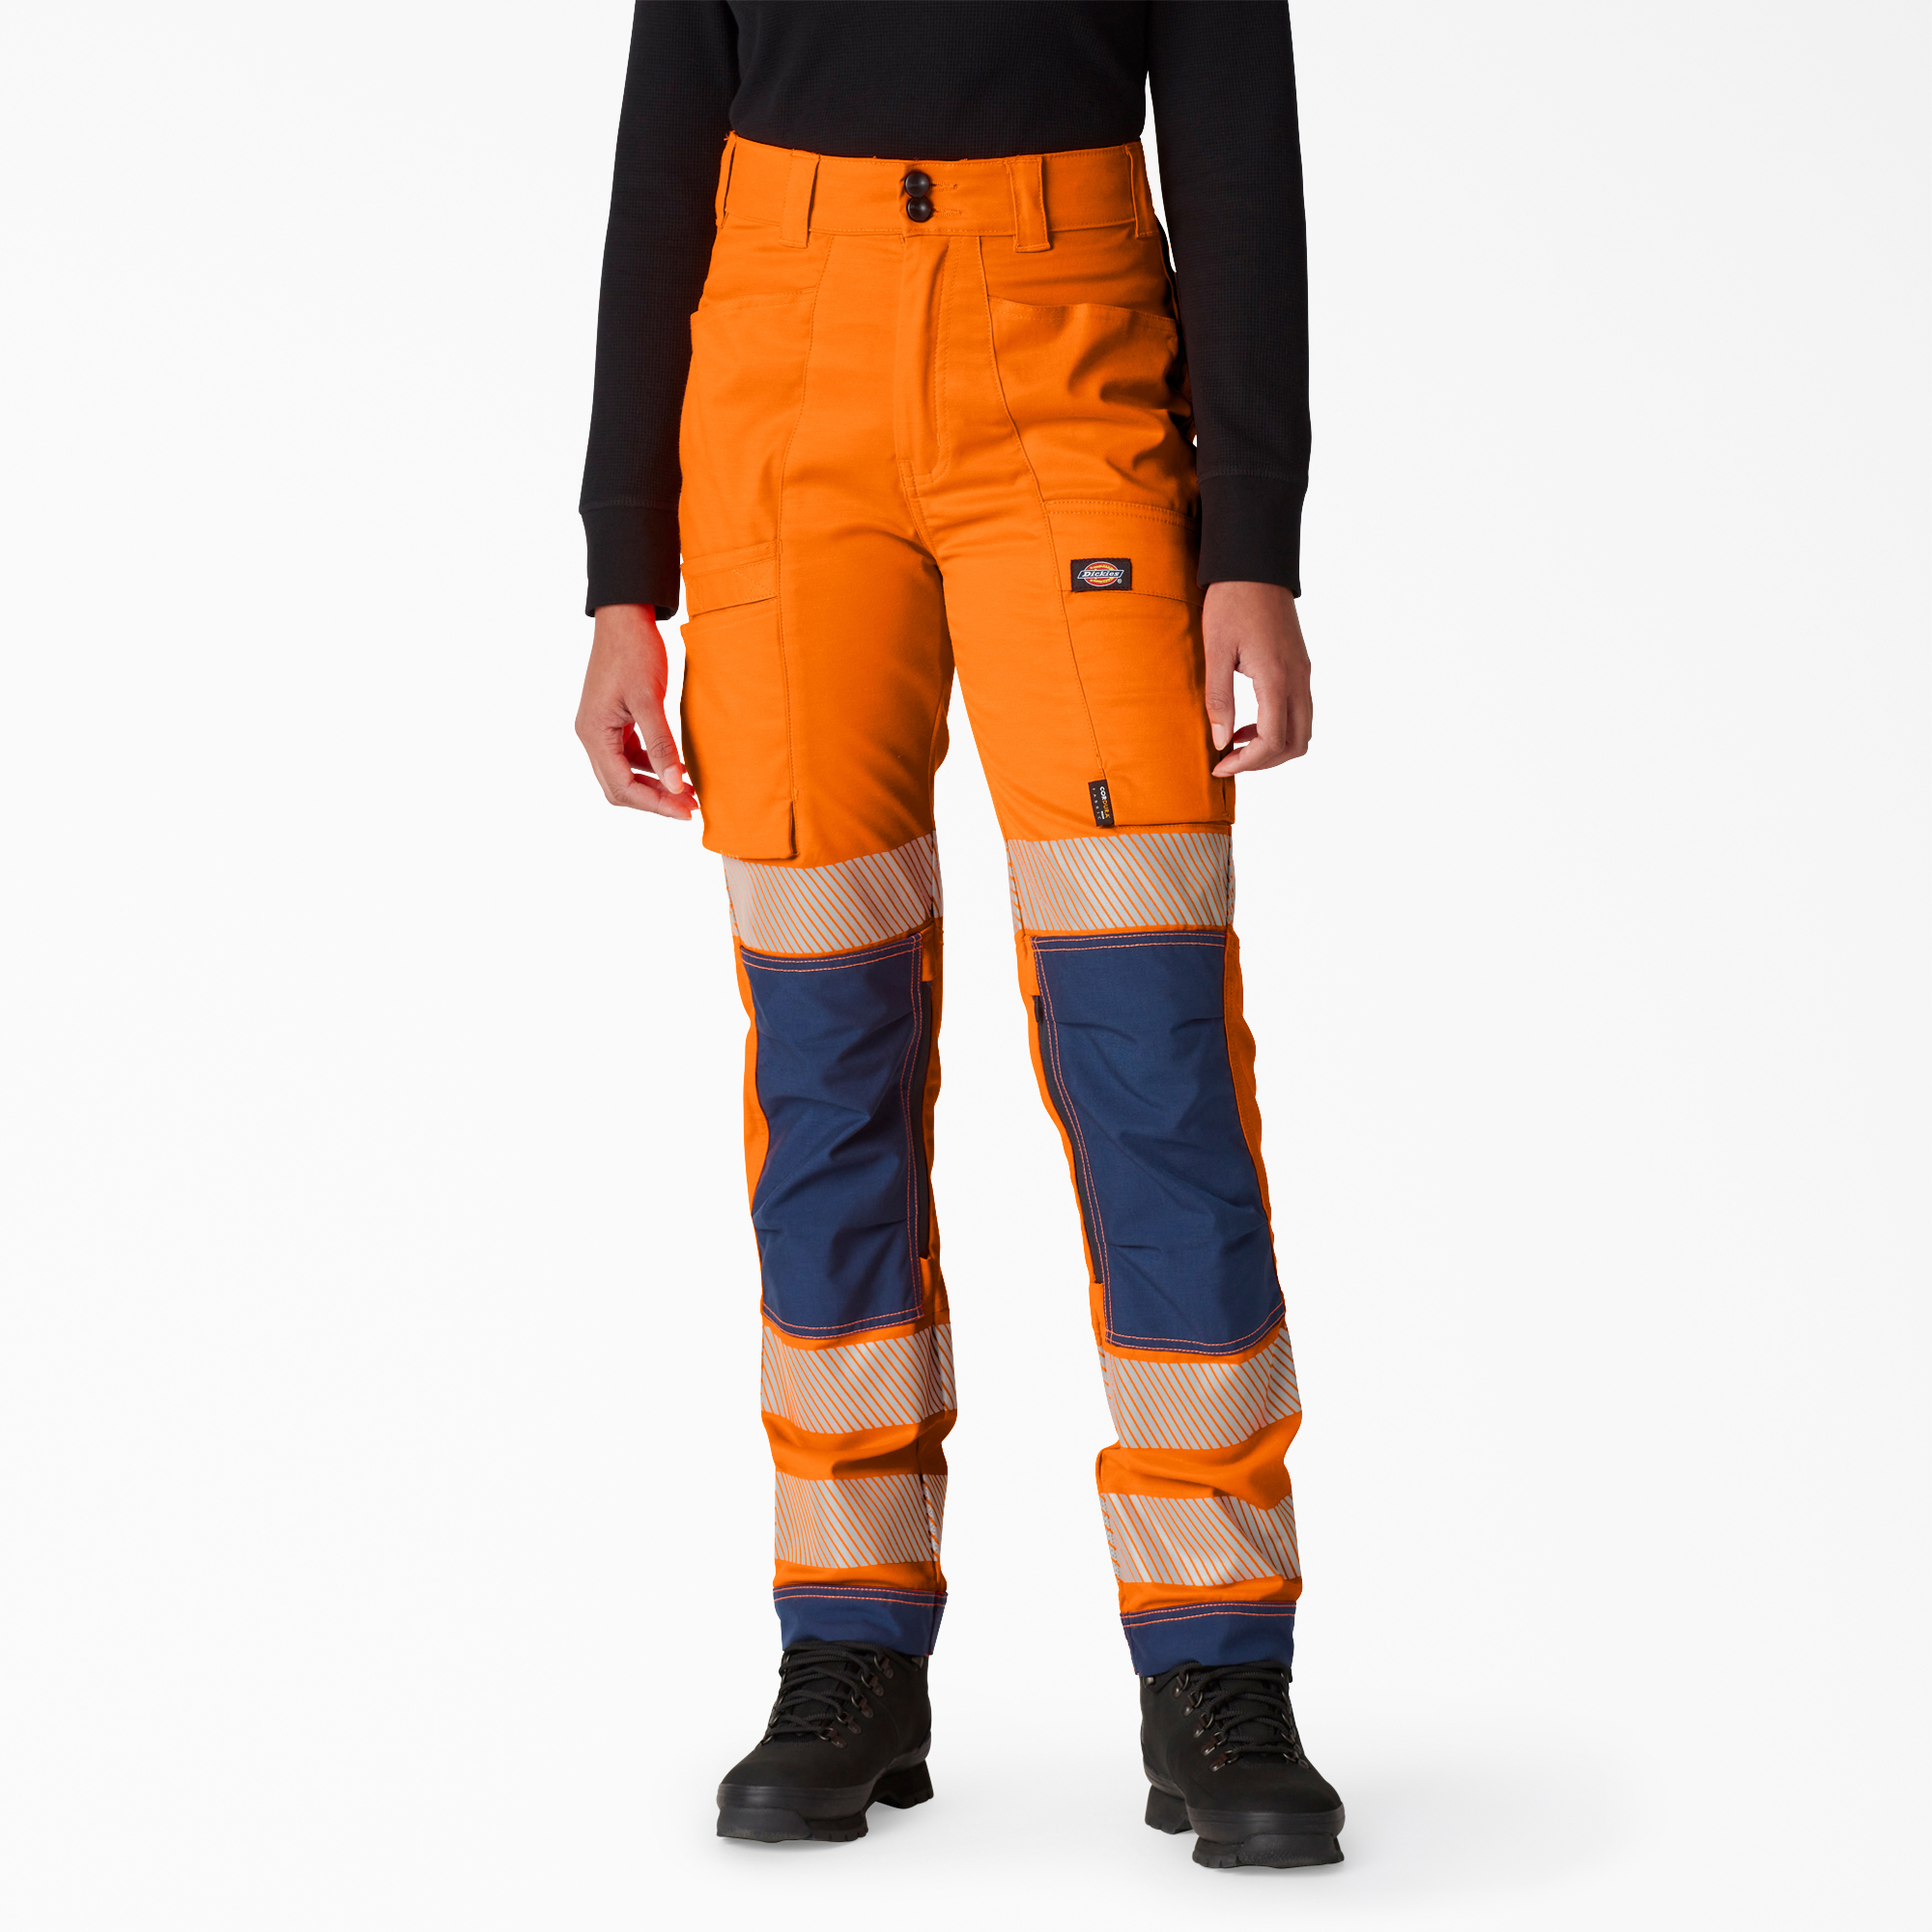 Women's Hi-Vis Performance Pants - Orange (OR)